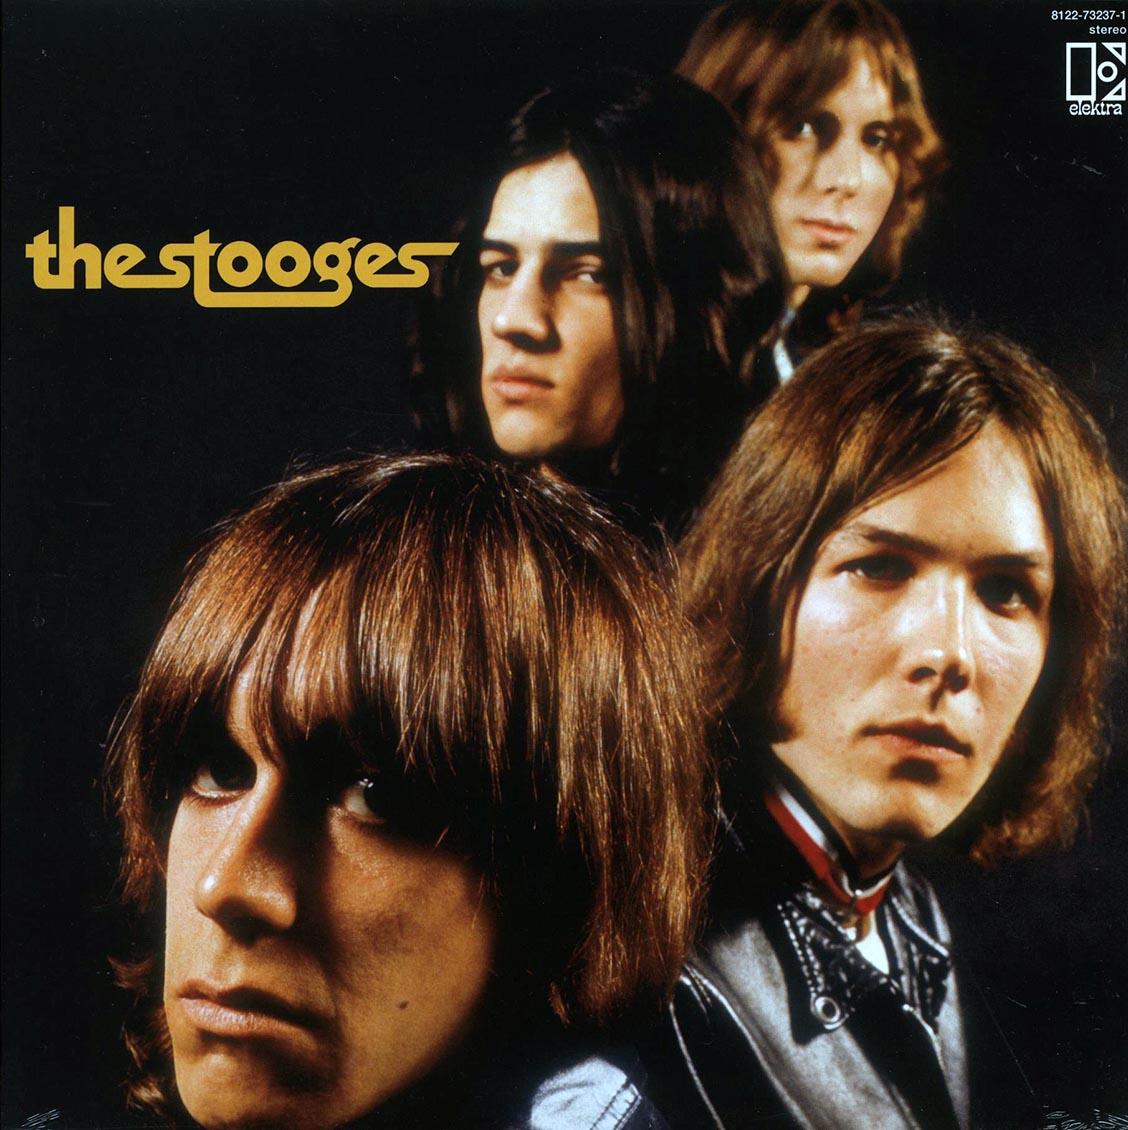 The Stooges - The Stooges (+ 9 bonus tracks) (2xLP) (remastered) (expanded edition) - Vinyl LP